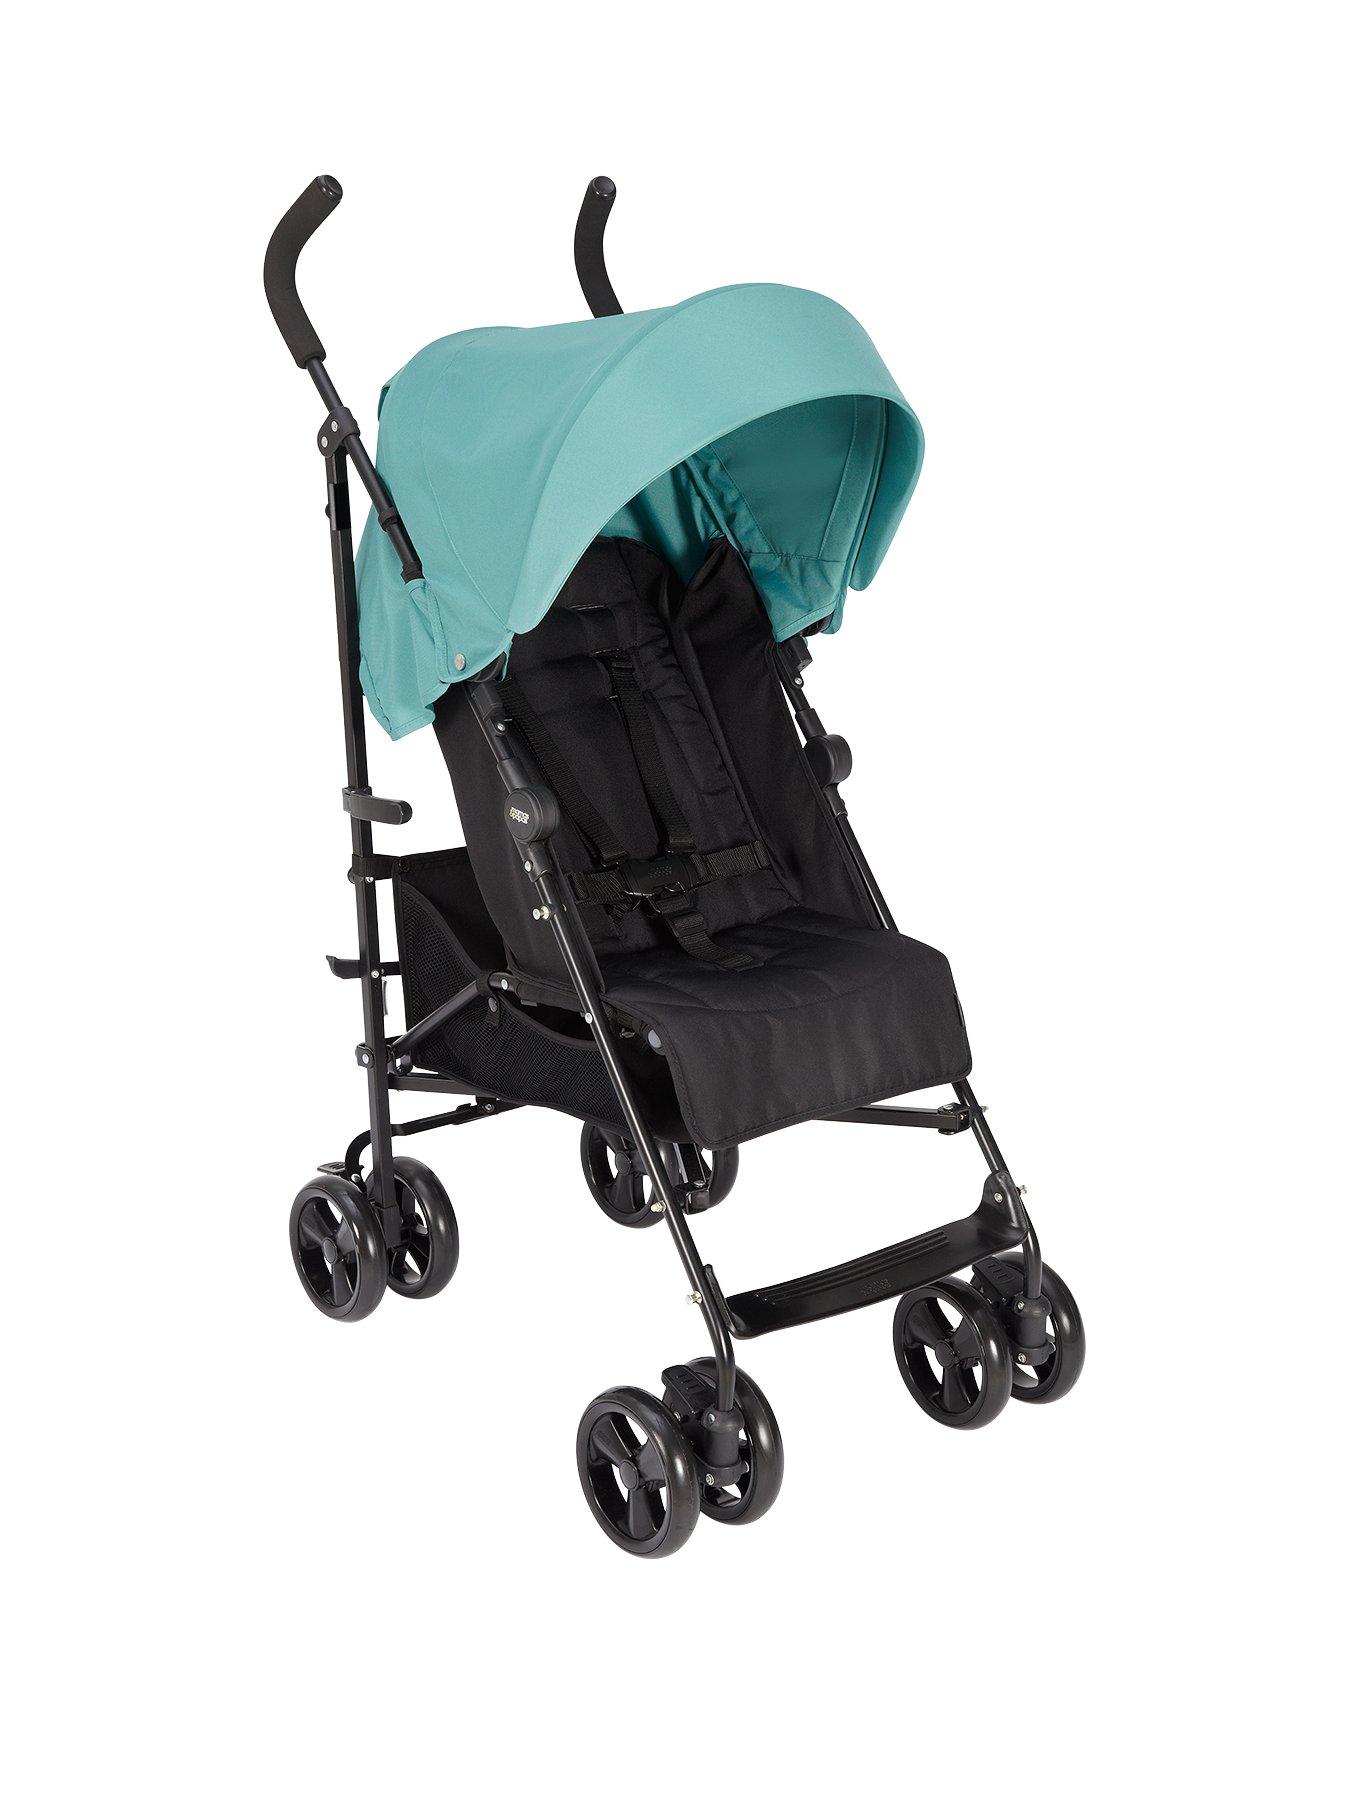 mamas and papas lightweight stroller